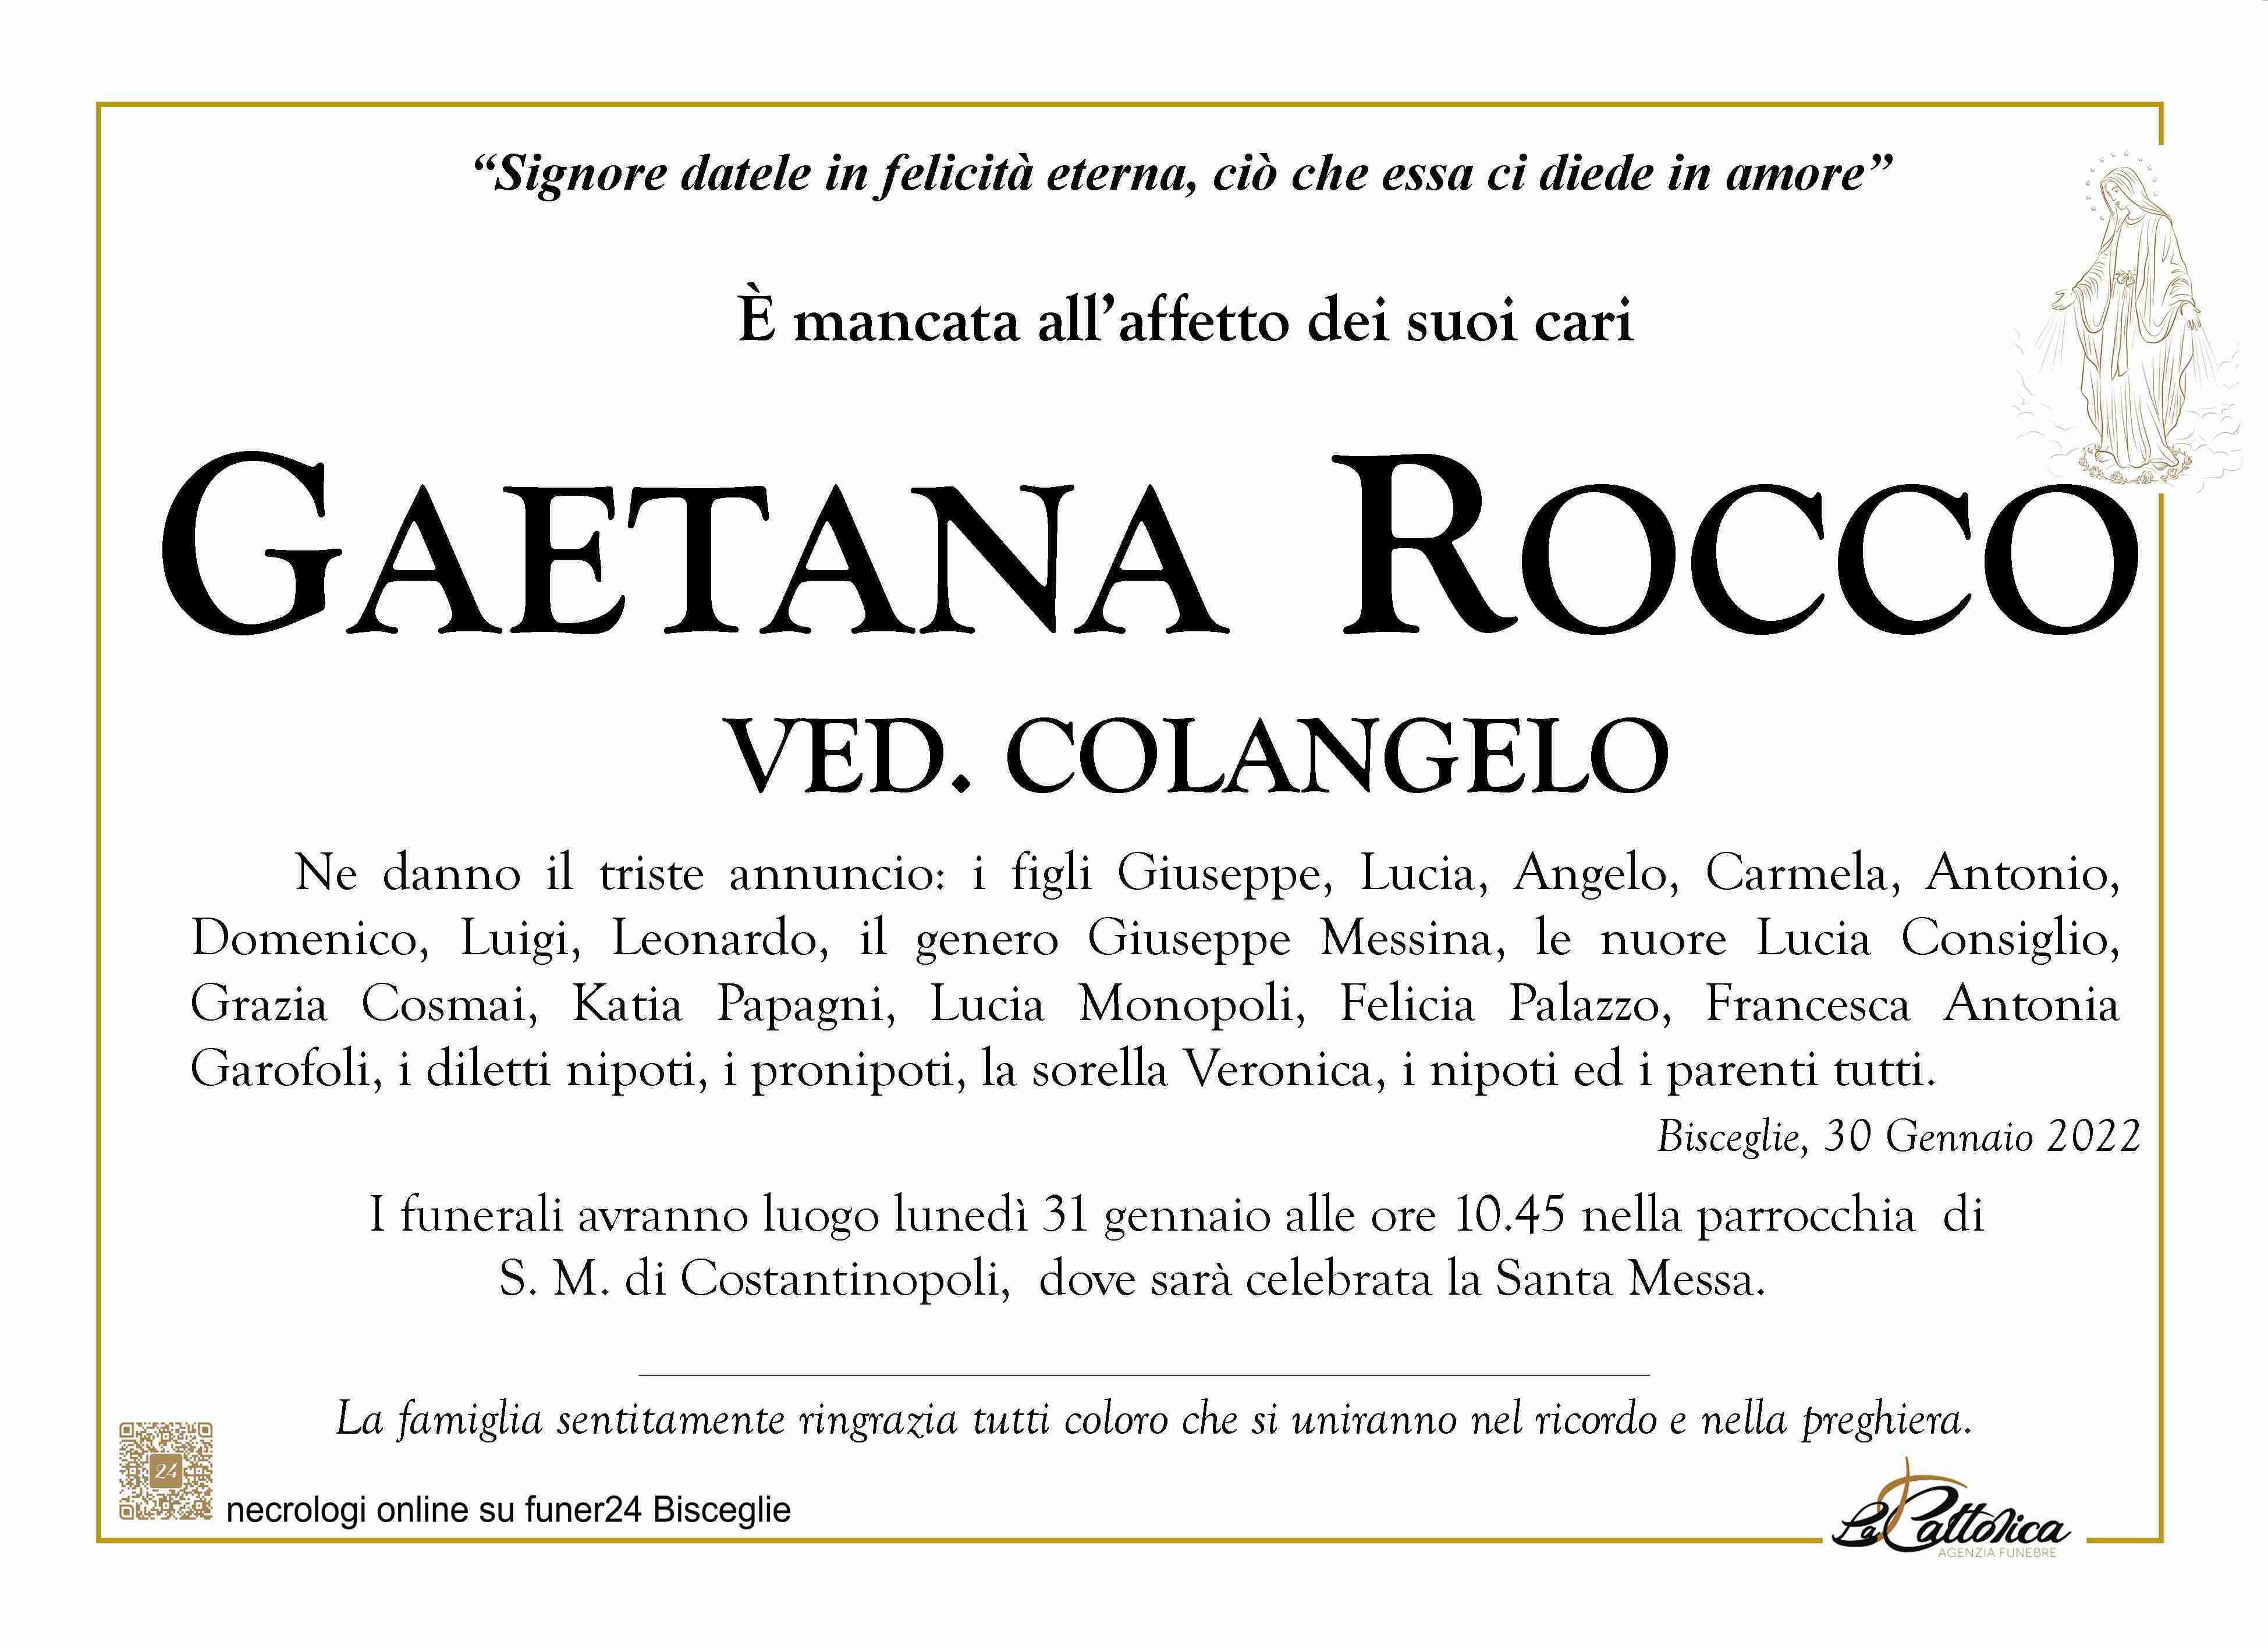 Gaetana Rocco